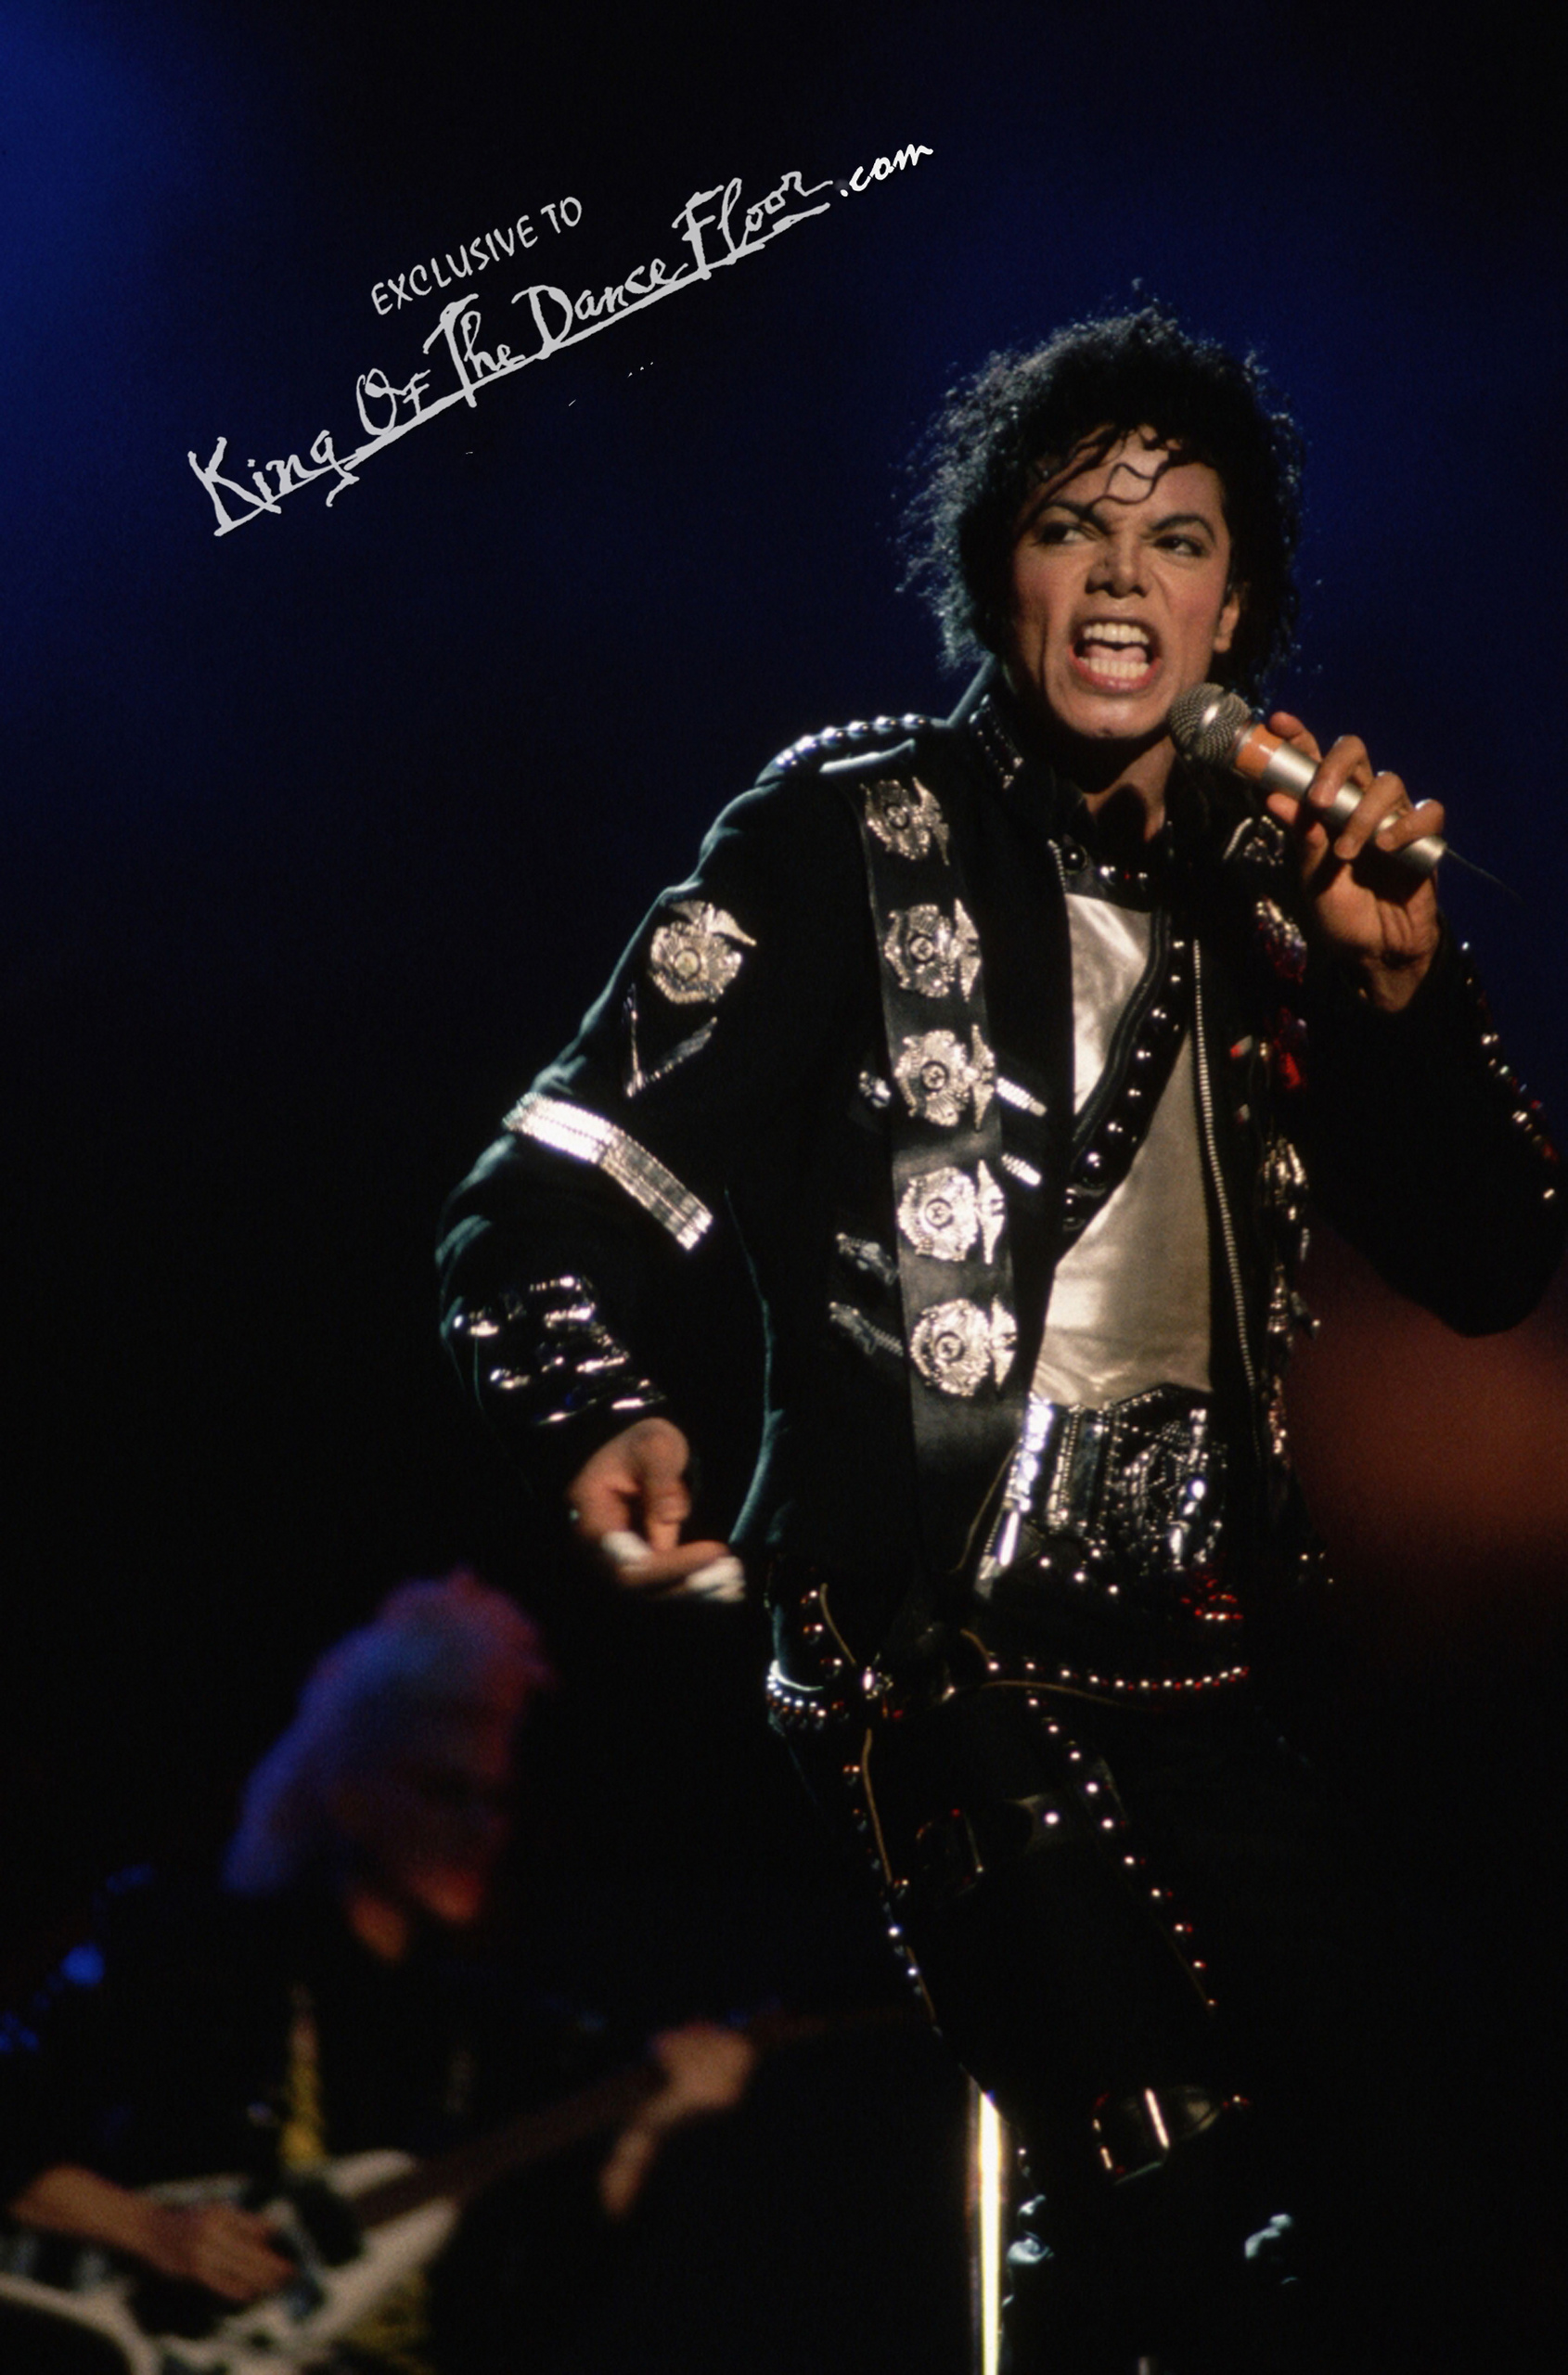 【MJ】迈克尔杰克逊经典现场,开头就被帅到了!《Billie jean》观众激动到哭,有的都可以直接上台当伴舞了！_哔哩哔哩 (゜-゜)つロ ...